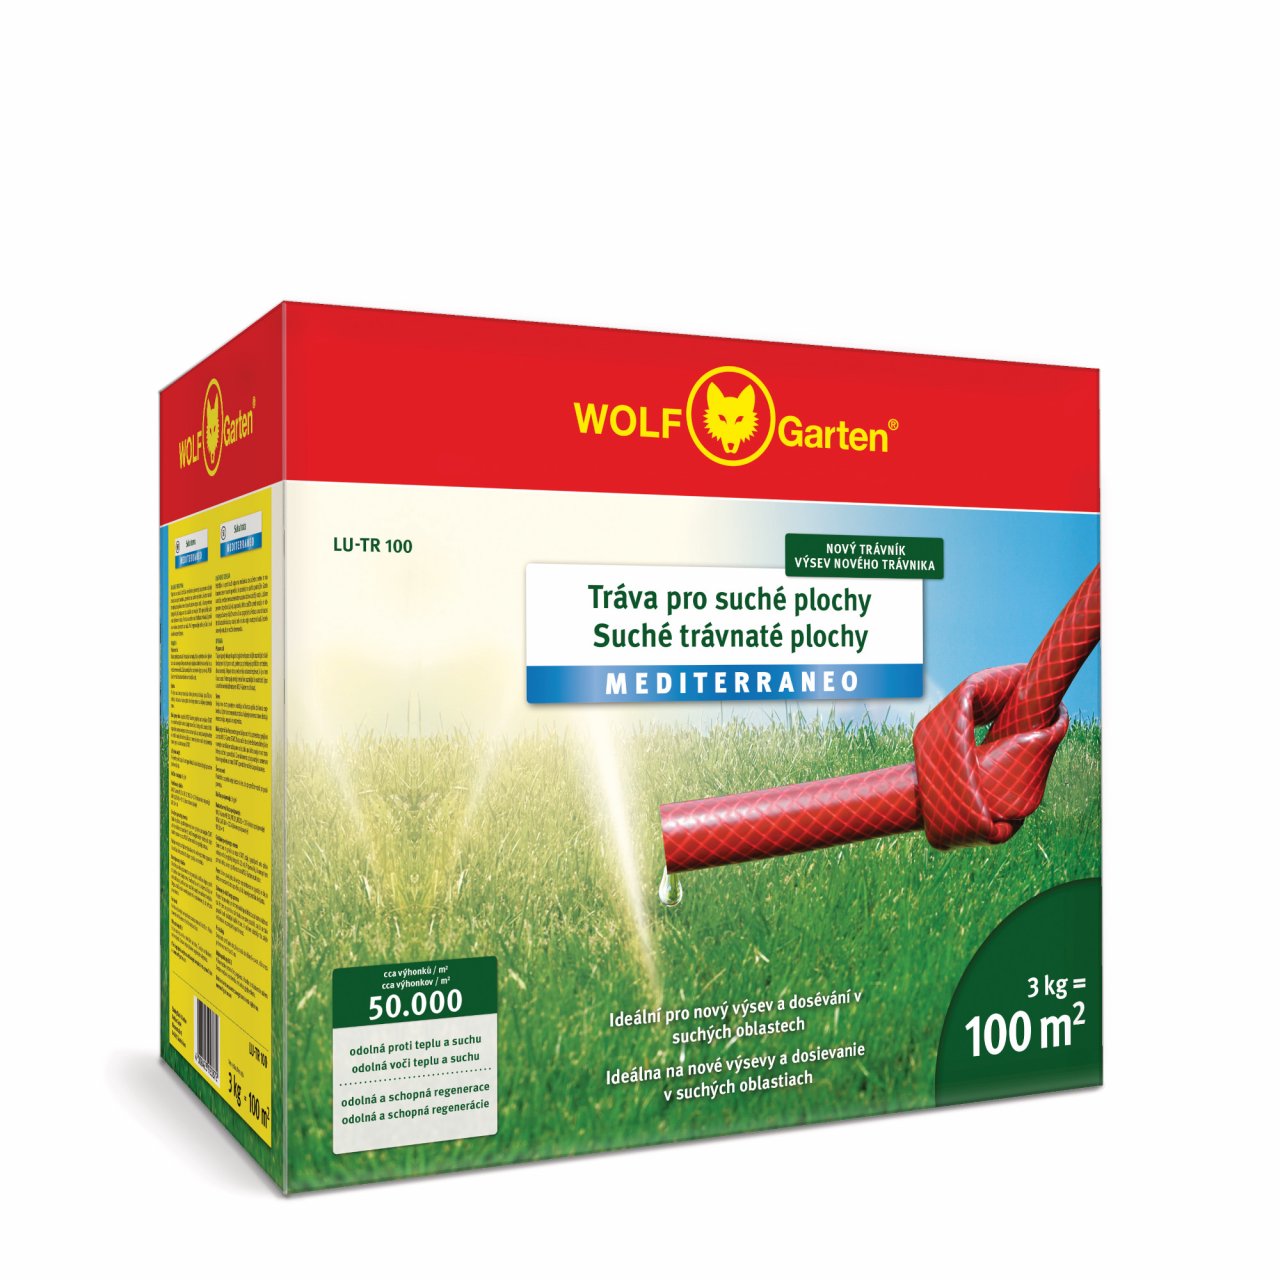 WOLF-Garten LU-TR 100 travní osivo do sucha (100 m2)